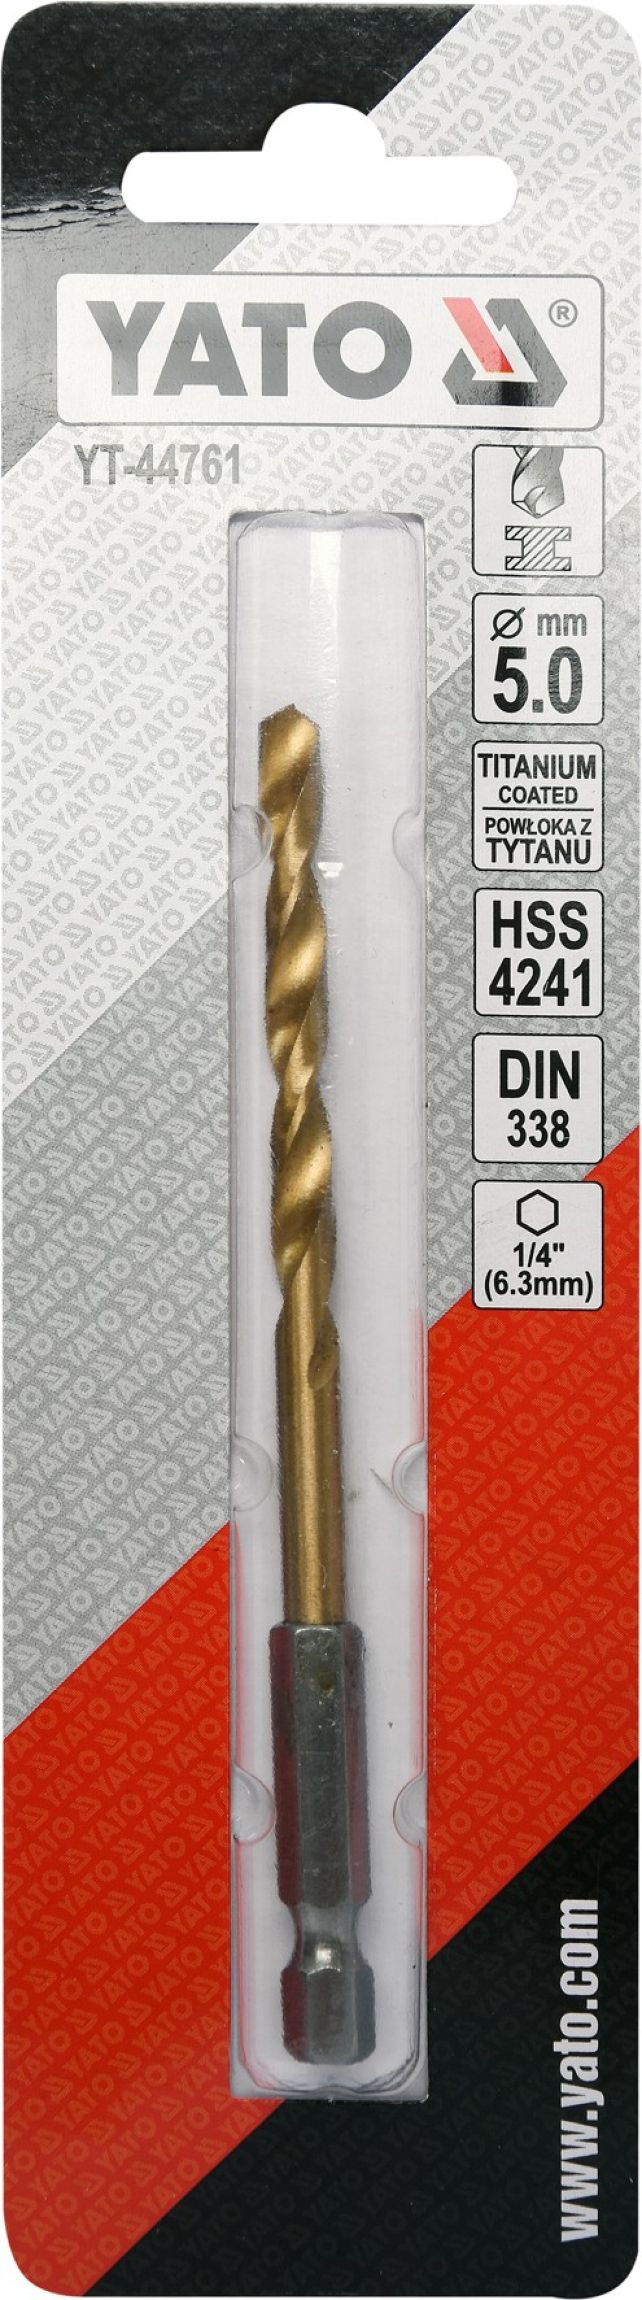 Vrtk do kovu HSS-titan 2,5mm se estihranou stopkou 1/4" Yato YT-44752